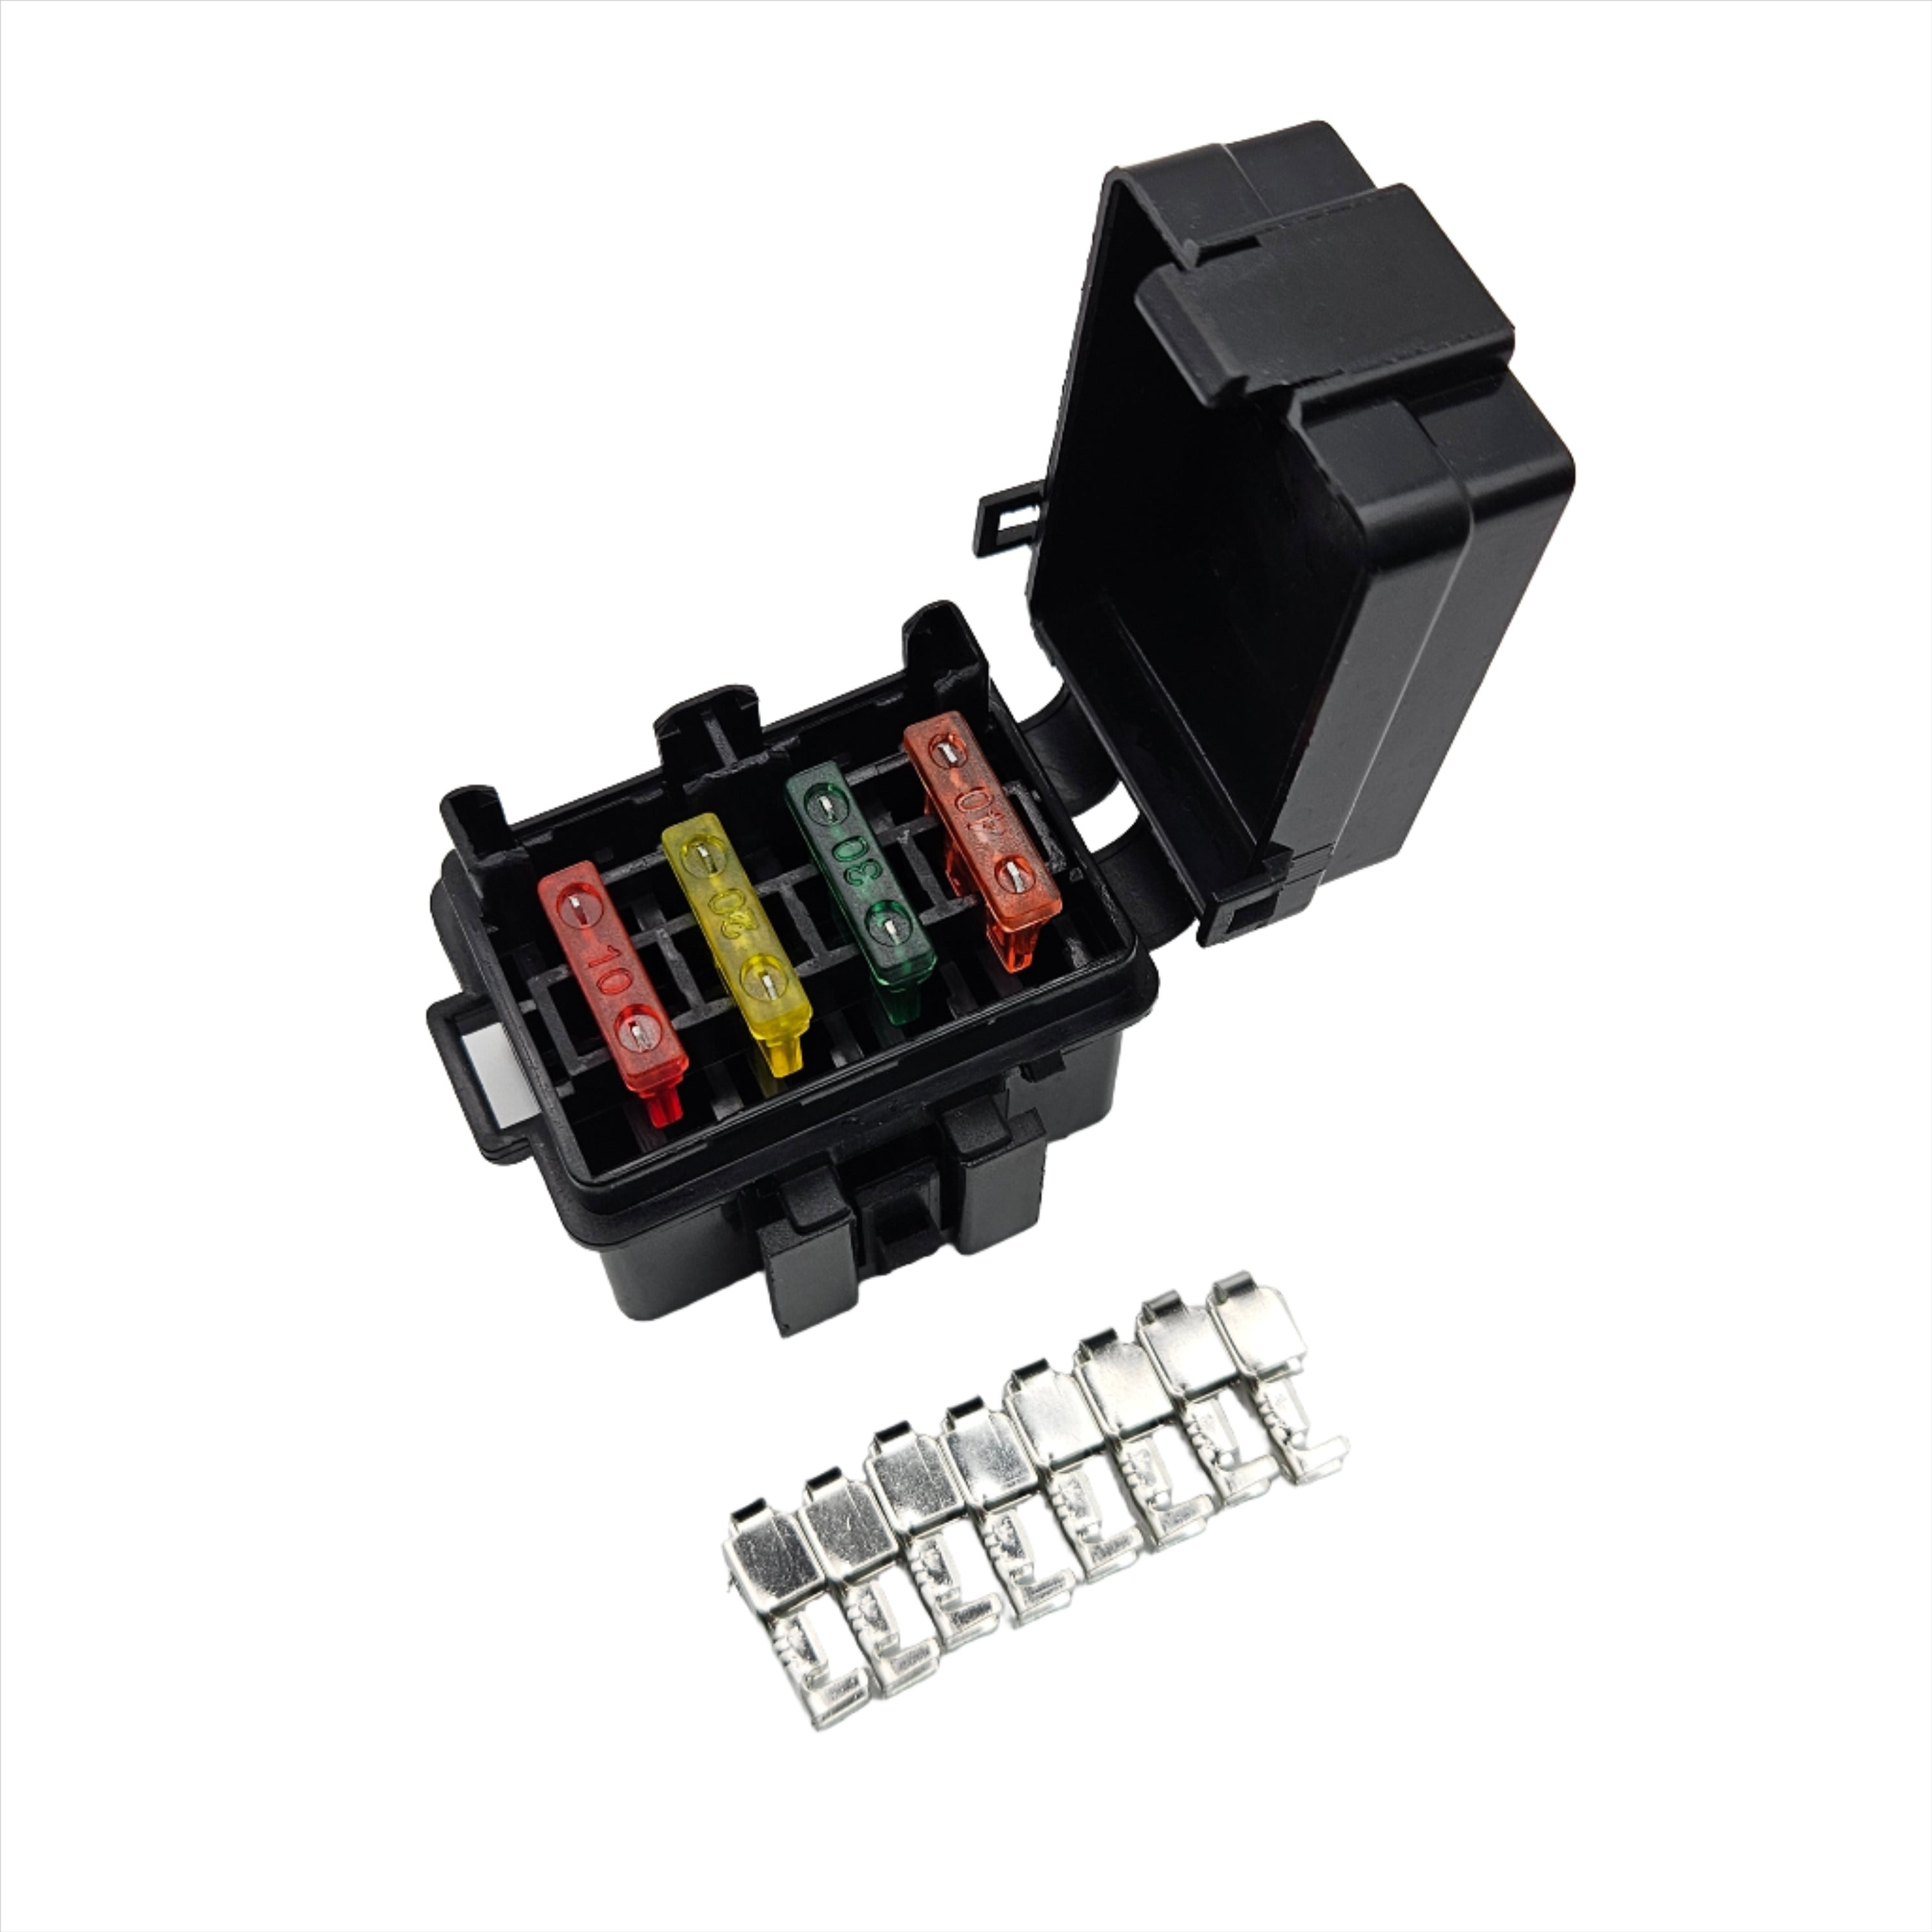 4 Way Fuse Box Standard Automotive Circuit Controller Box Medium Relay Assembly Car Fuse Holder